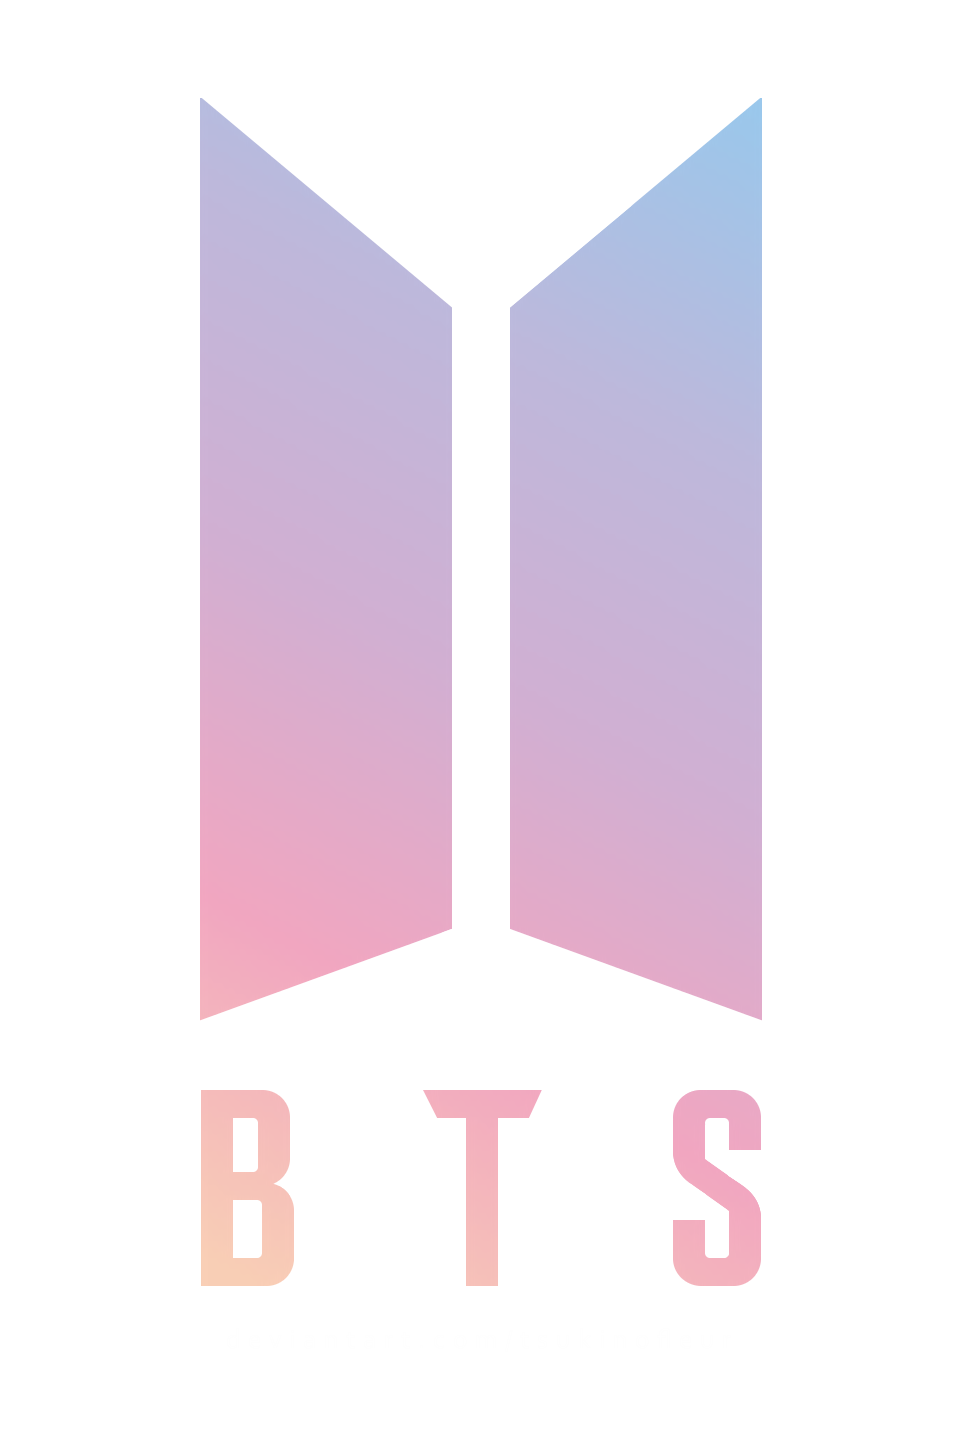 BTS] Logo - PNG by TsukinoFleur on DeviantArt